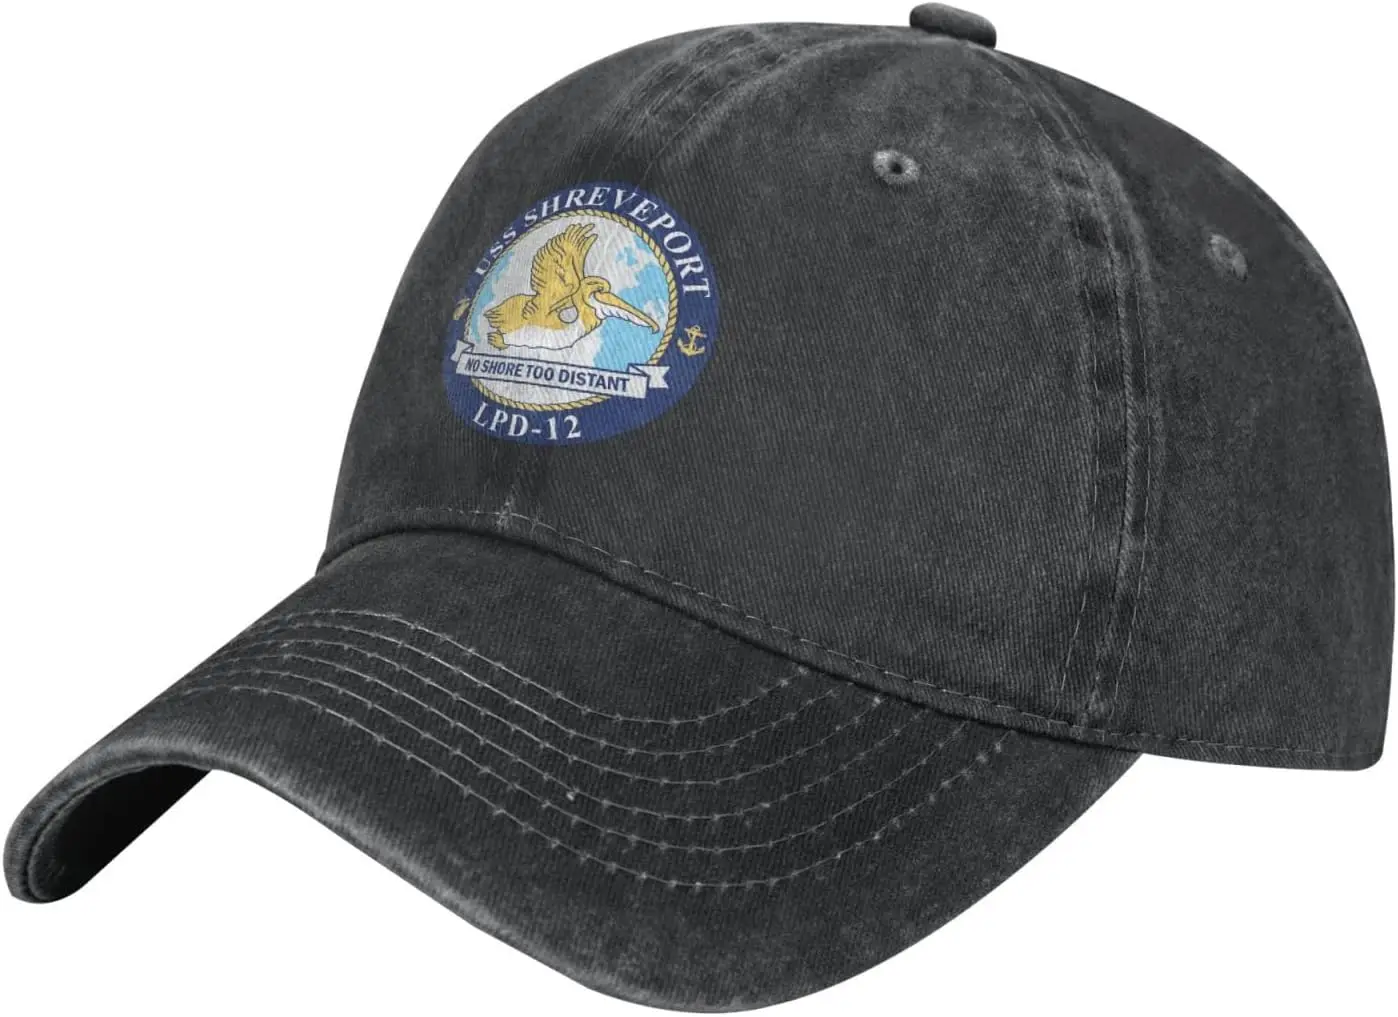 

Navy LHA LHD LPD US Navy USS Shreveport LPD-12 Amphibious Transport Dock Trucker Hat-Baseball Cap Washed Cotton Dad Hats